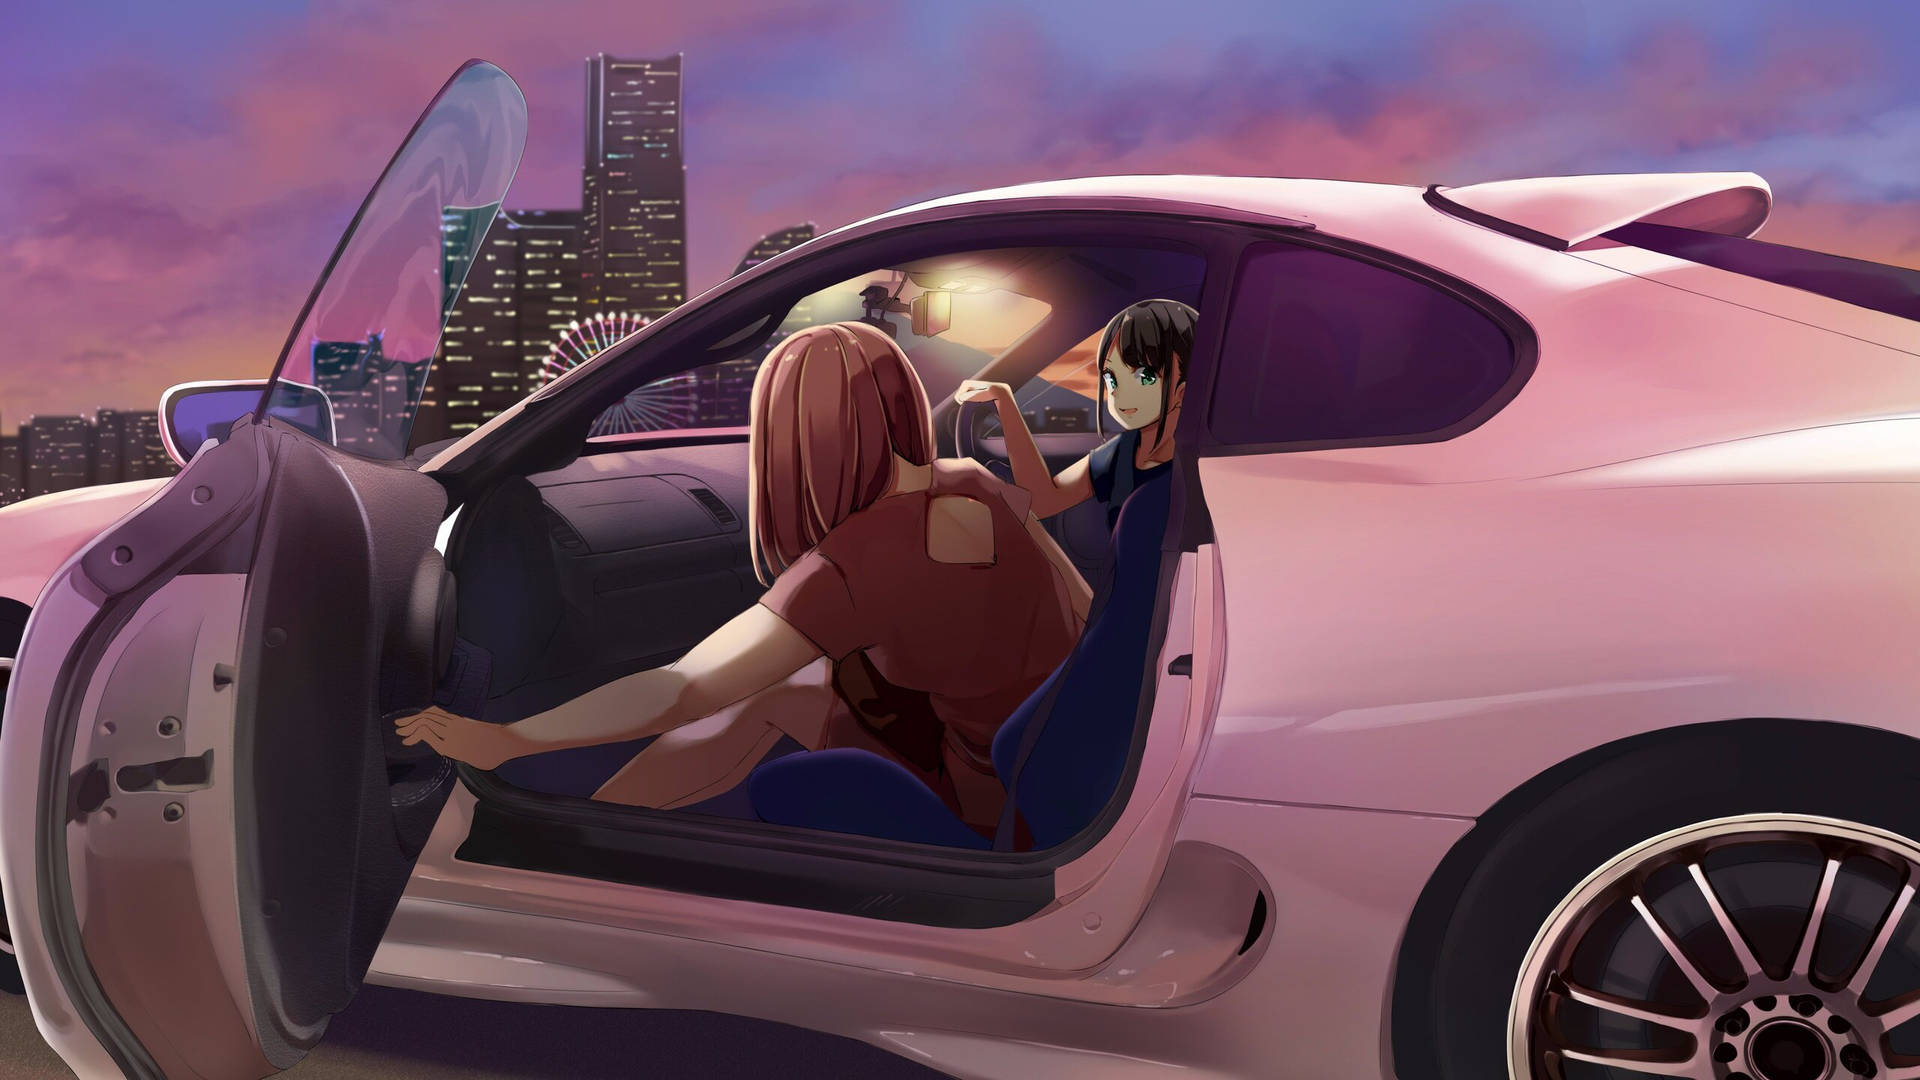 Girls Inside Toyota Supra Car Anime Wallpaper